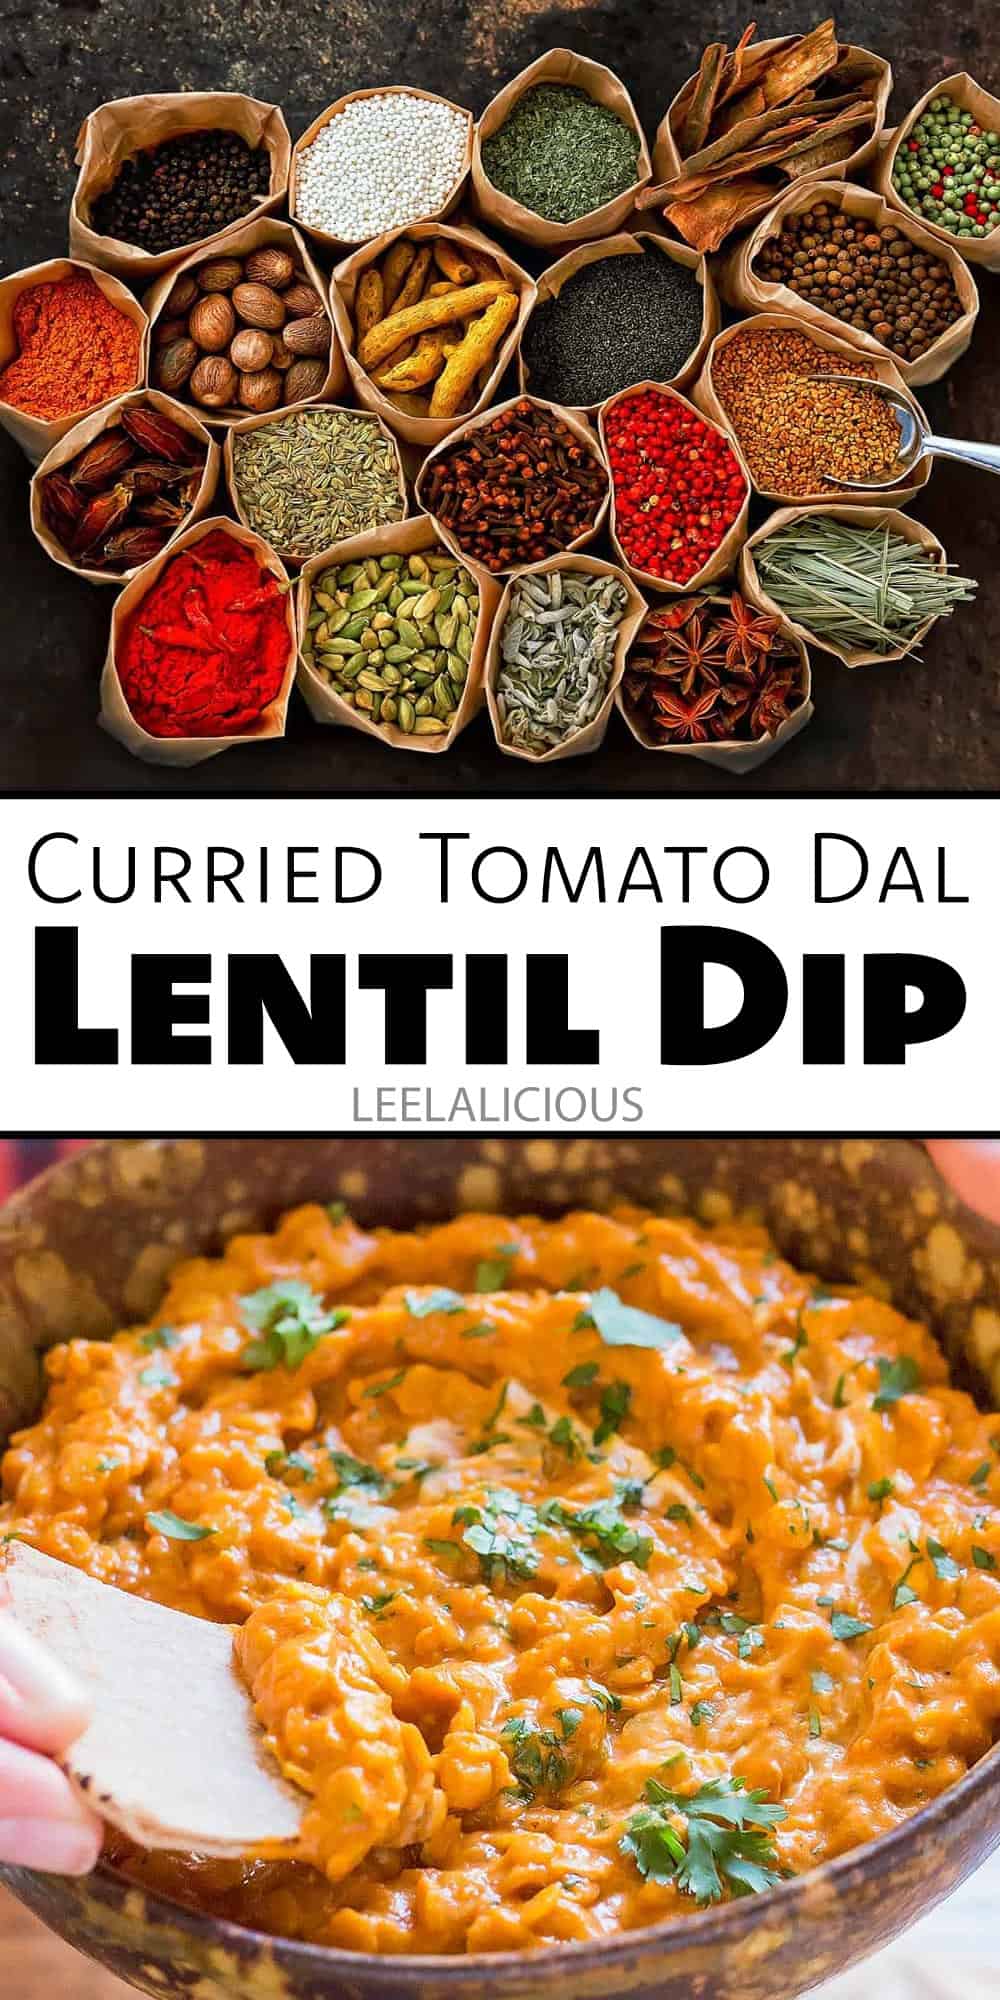 Lentil Dip - Curried Tomato Dal